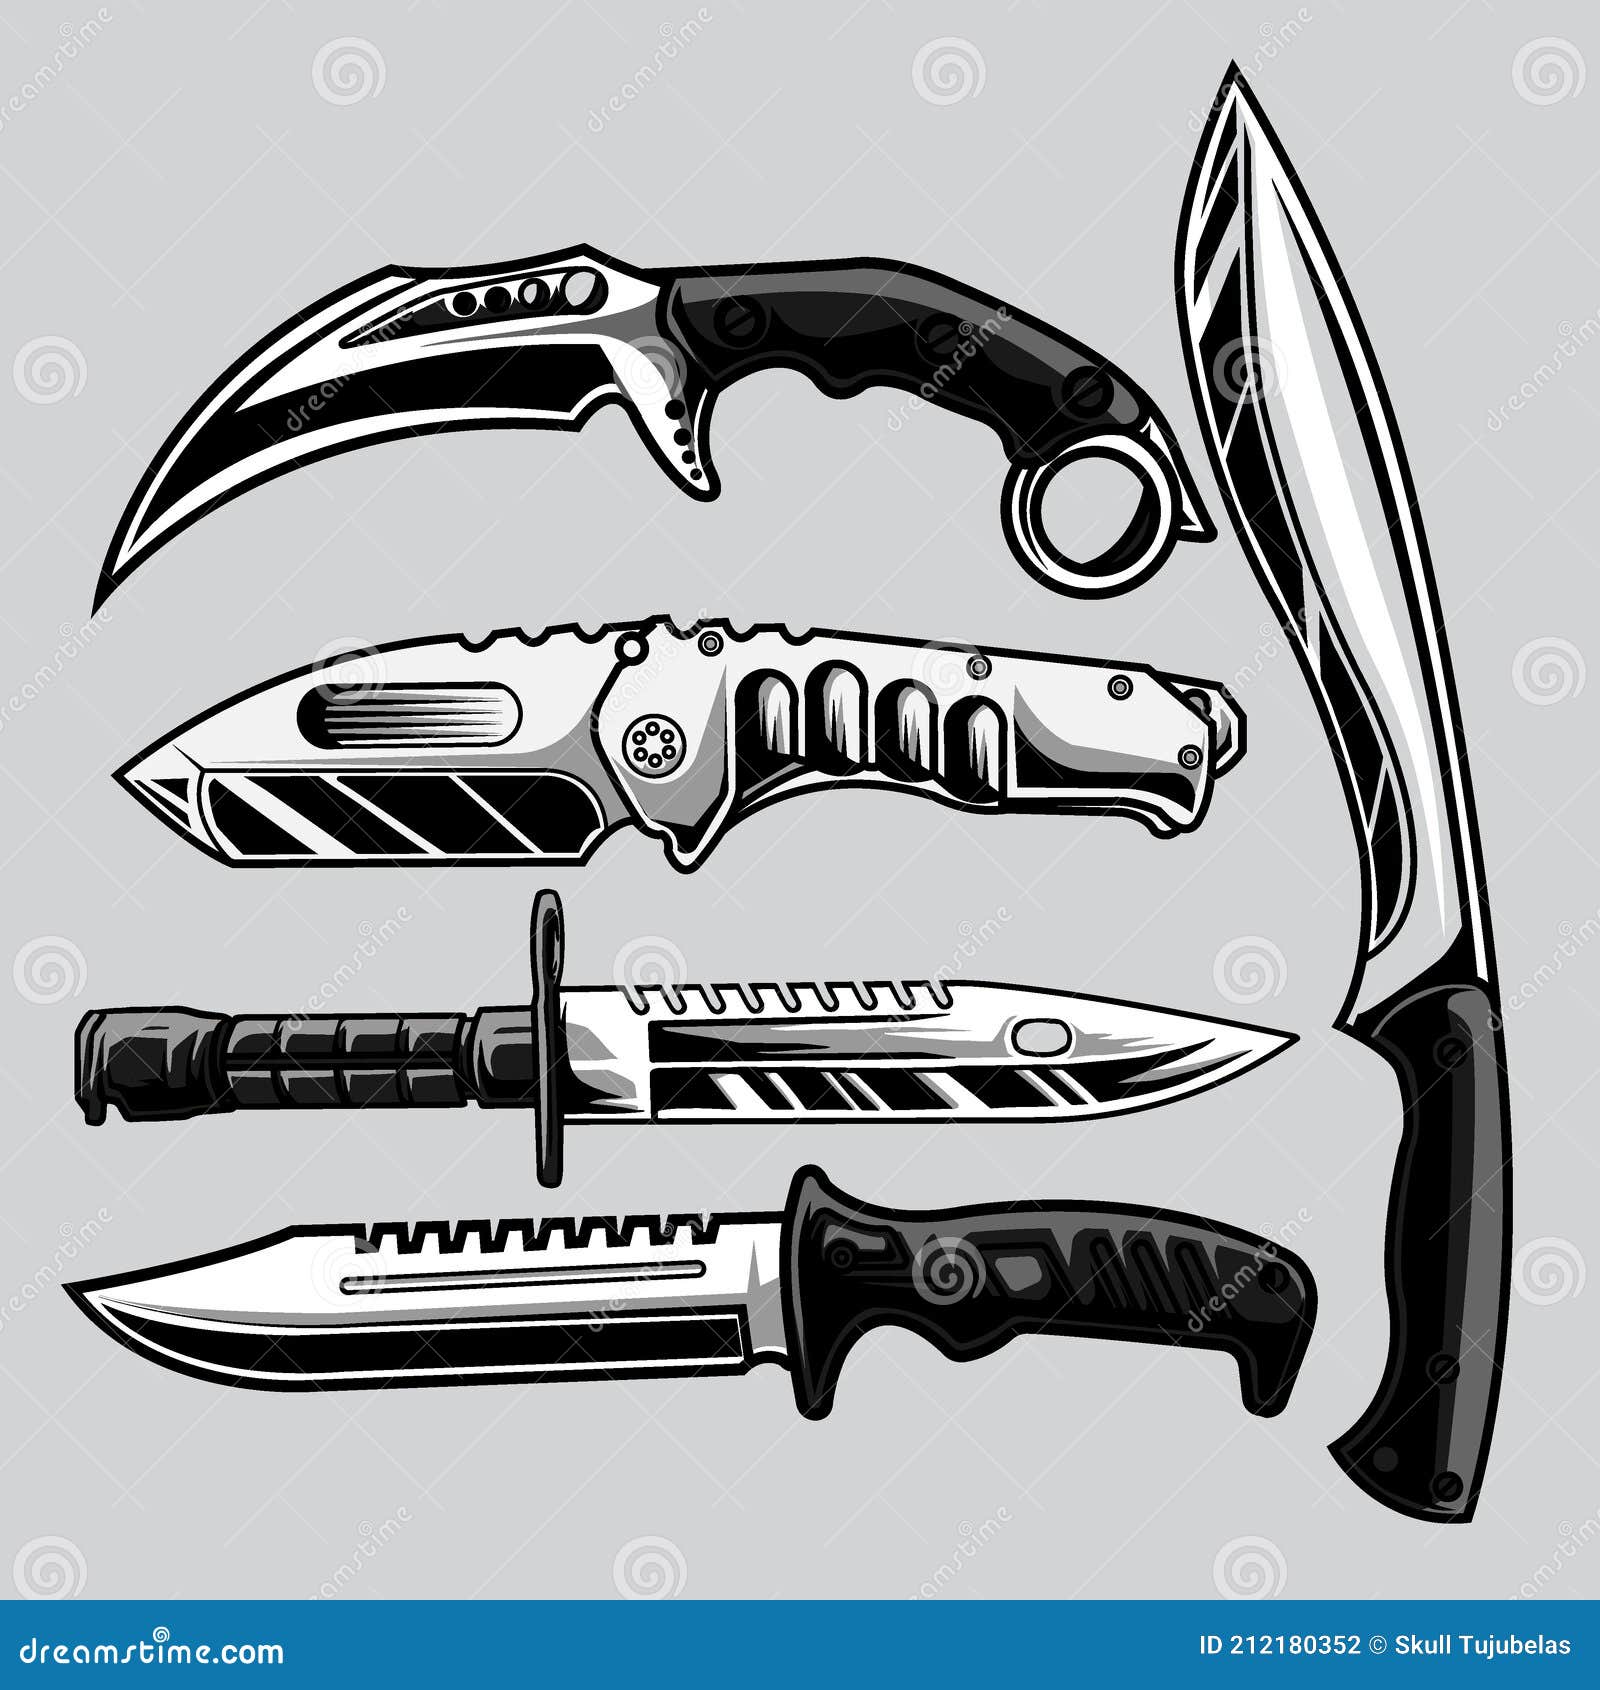 A Set of Illustration Tactical Knife Stock Vector - Illustration